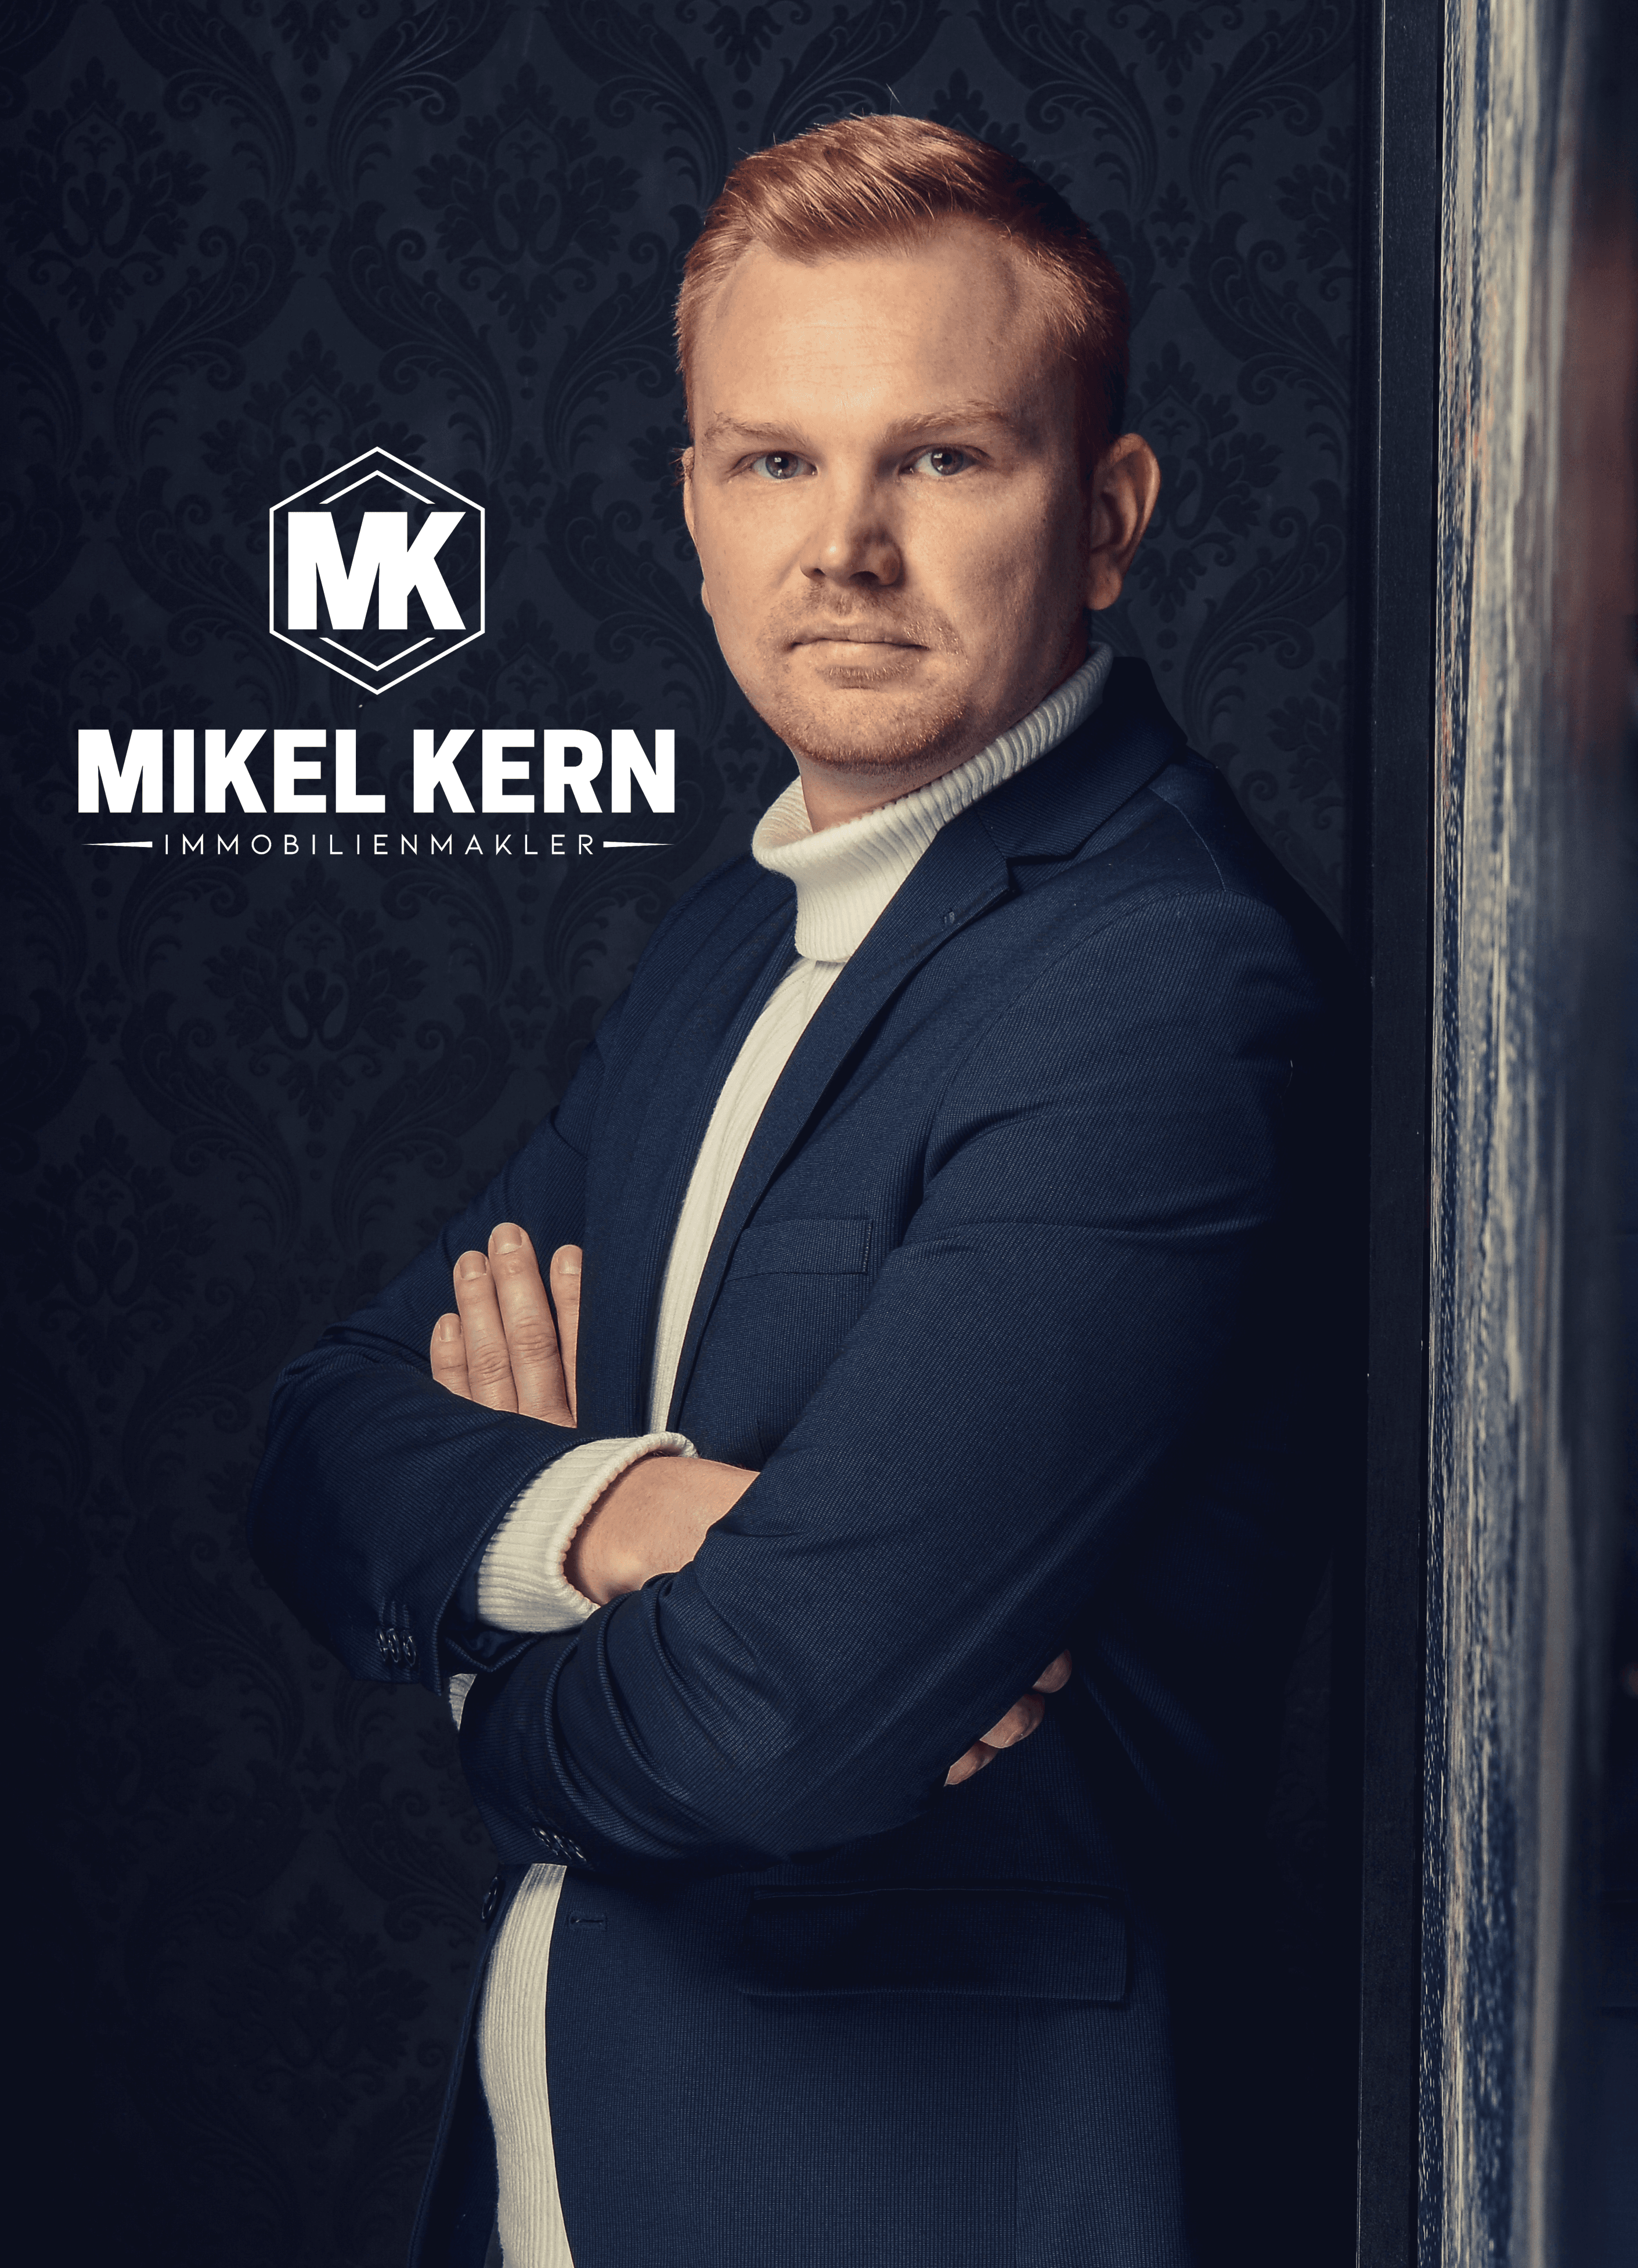 Mikel Kern | Immobilienmakler Königs Wusterhausen